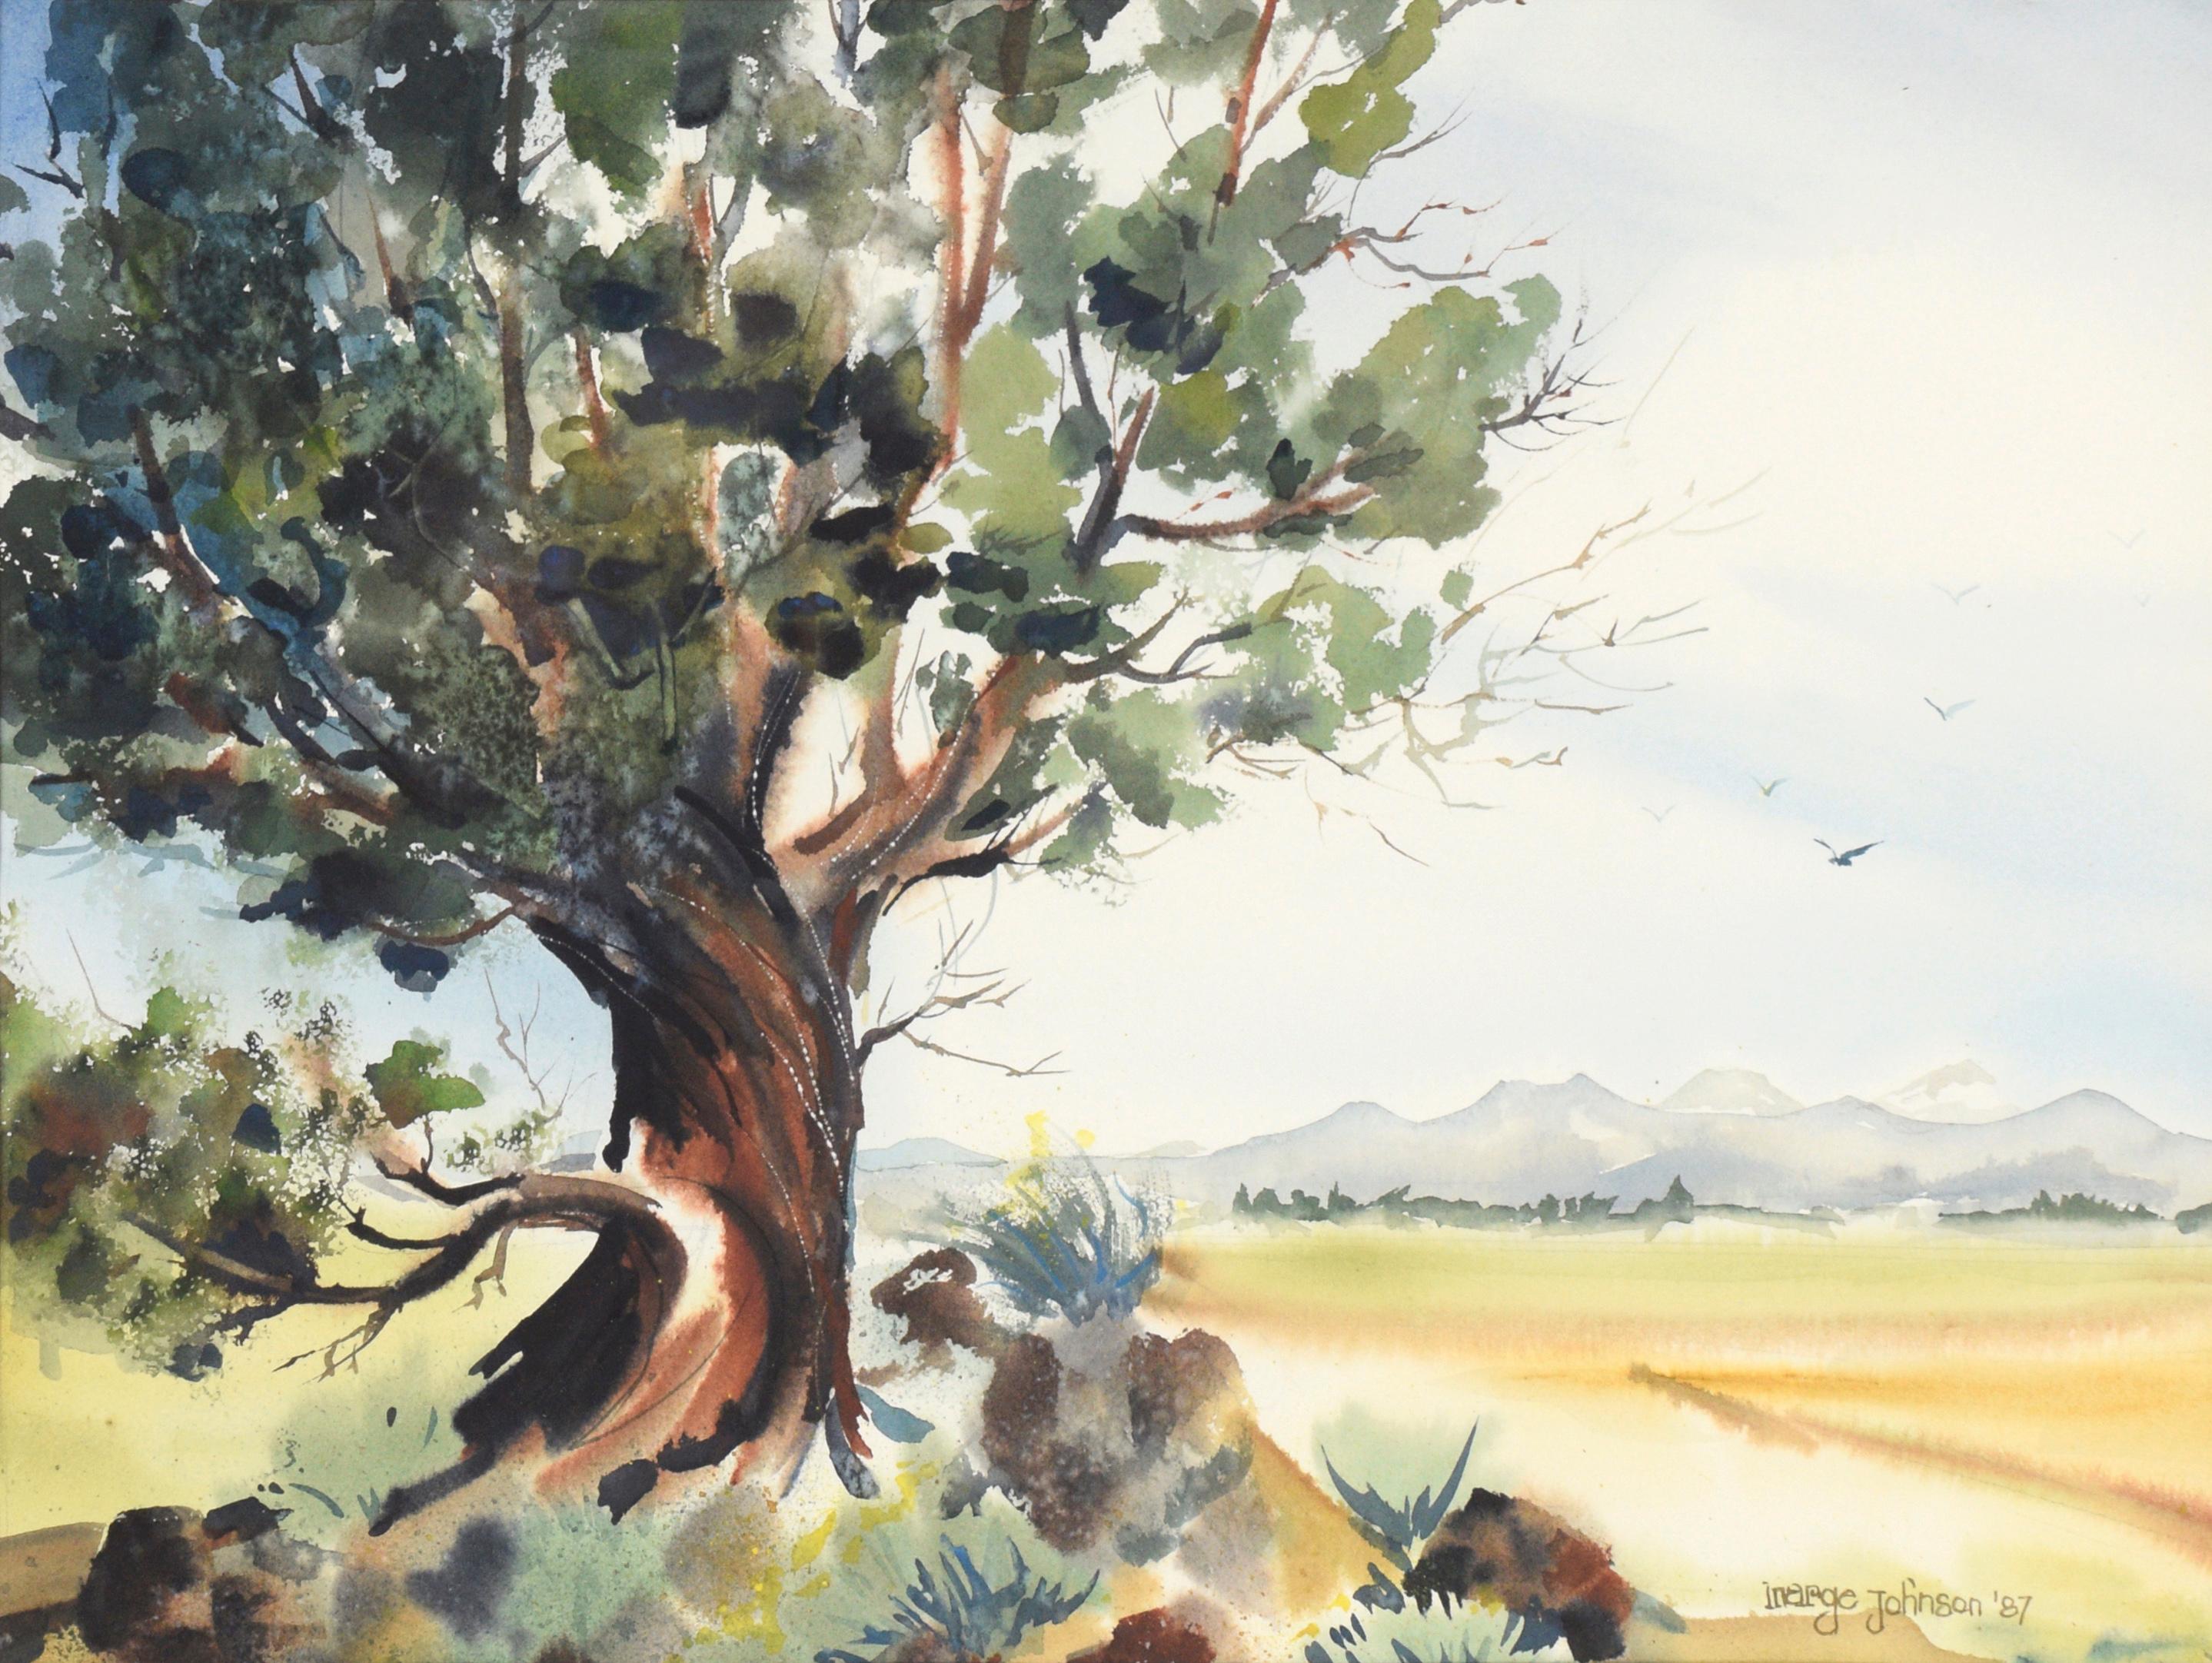 The Ancient Tree, Aquarell-Landschaftslandschaft – Art von Marge Eaton Johnson